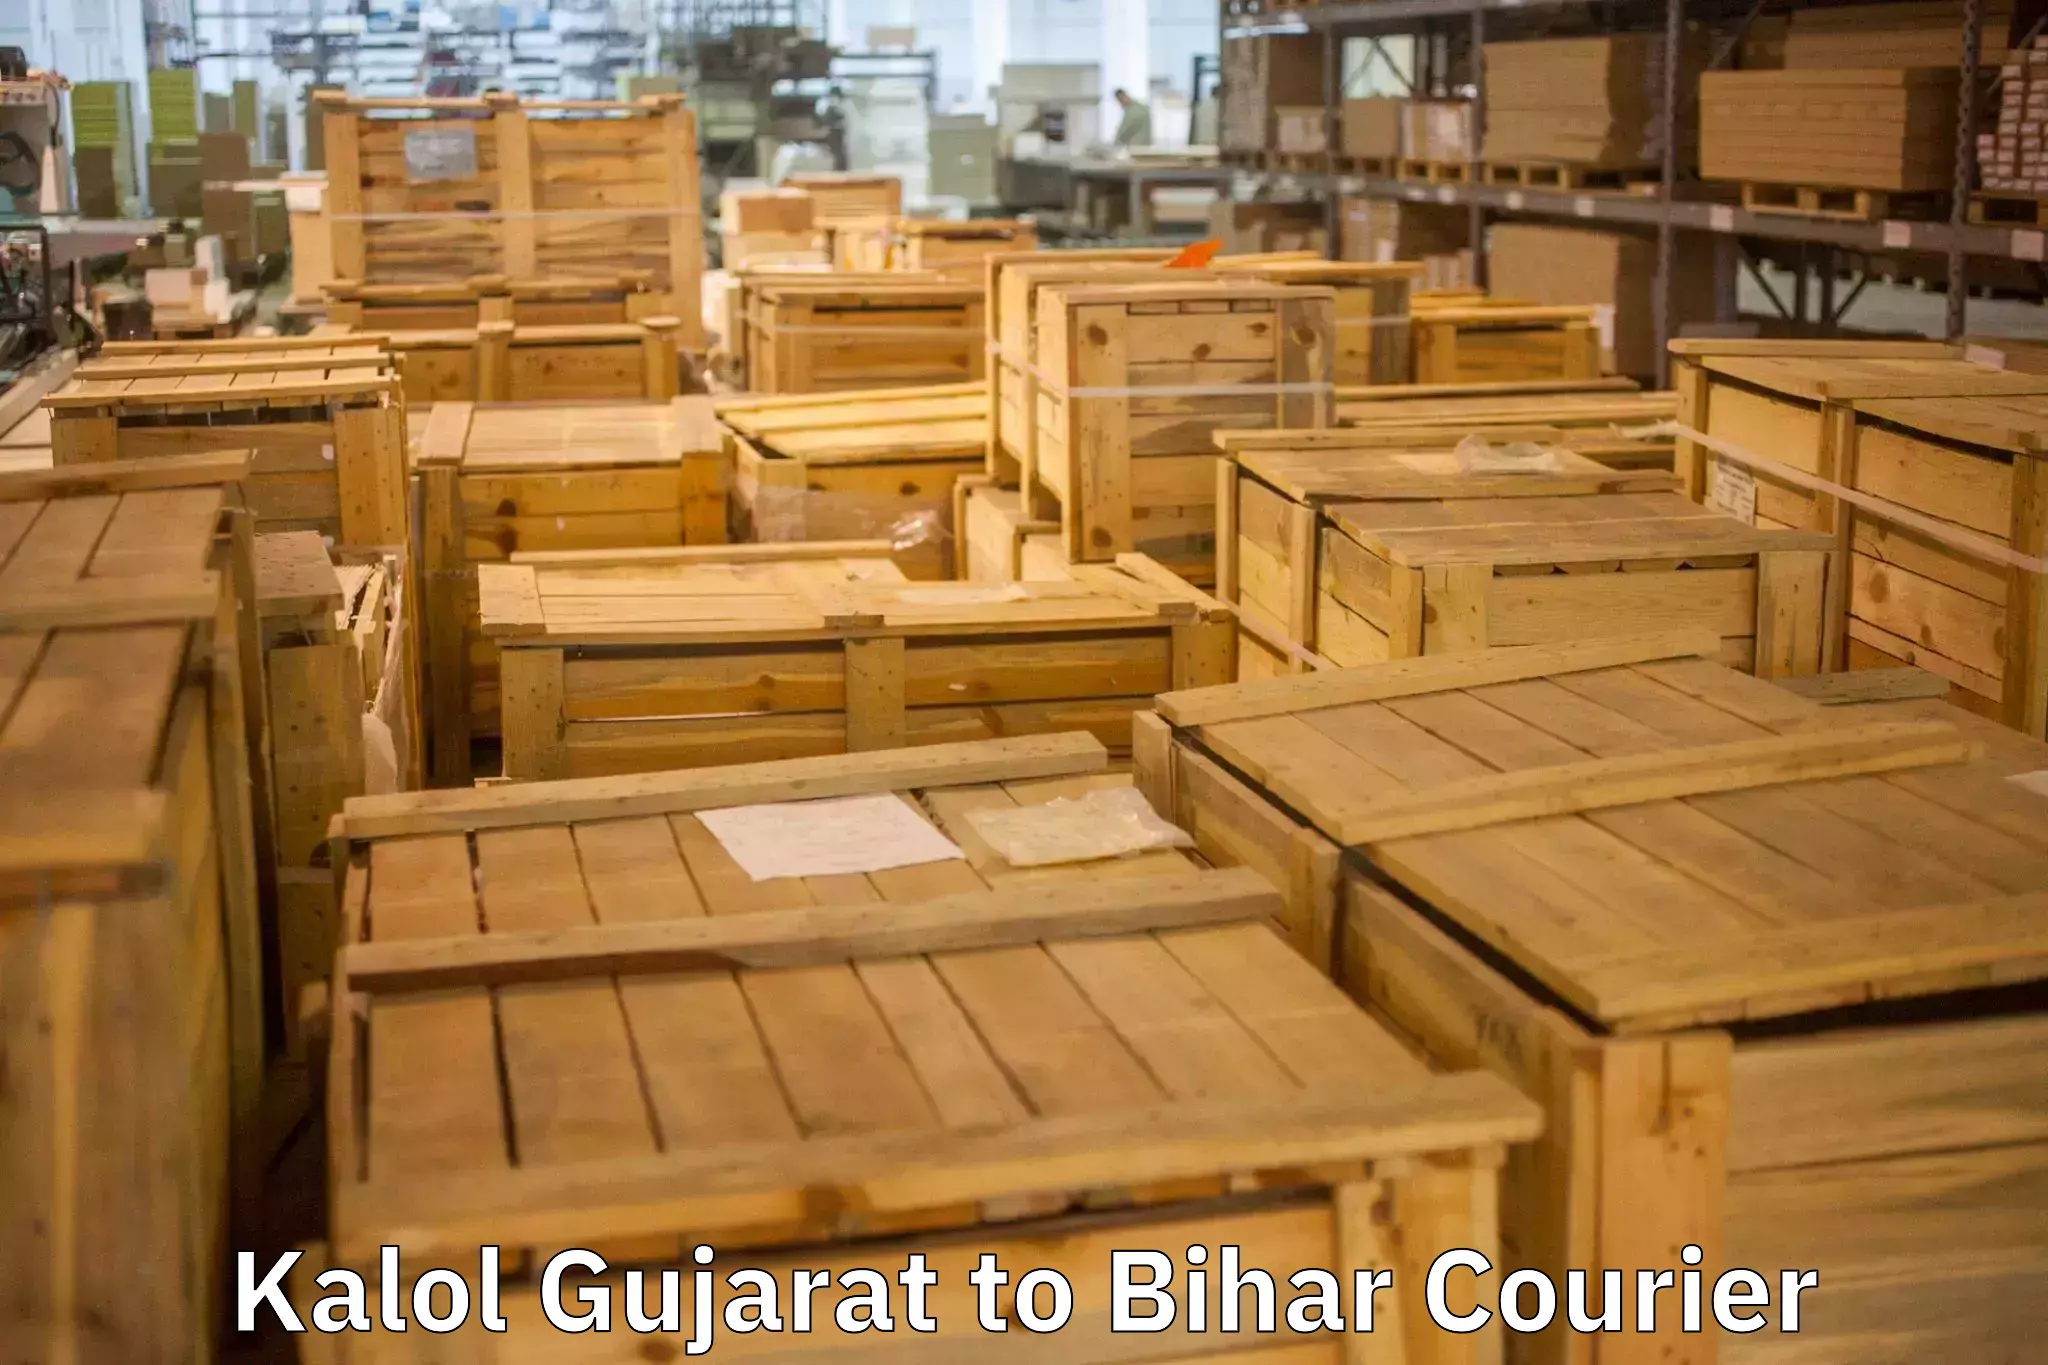 Moving and handling services Kalol Gujarat to Bhorey